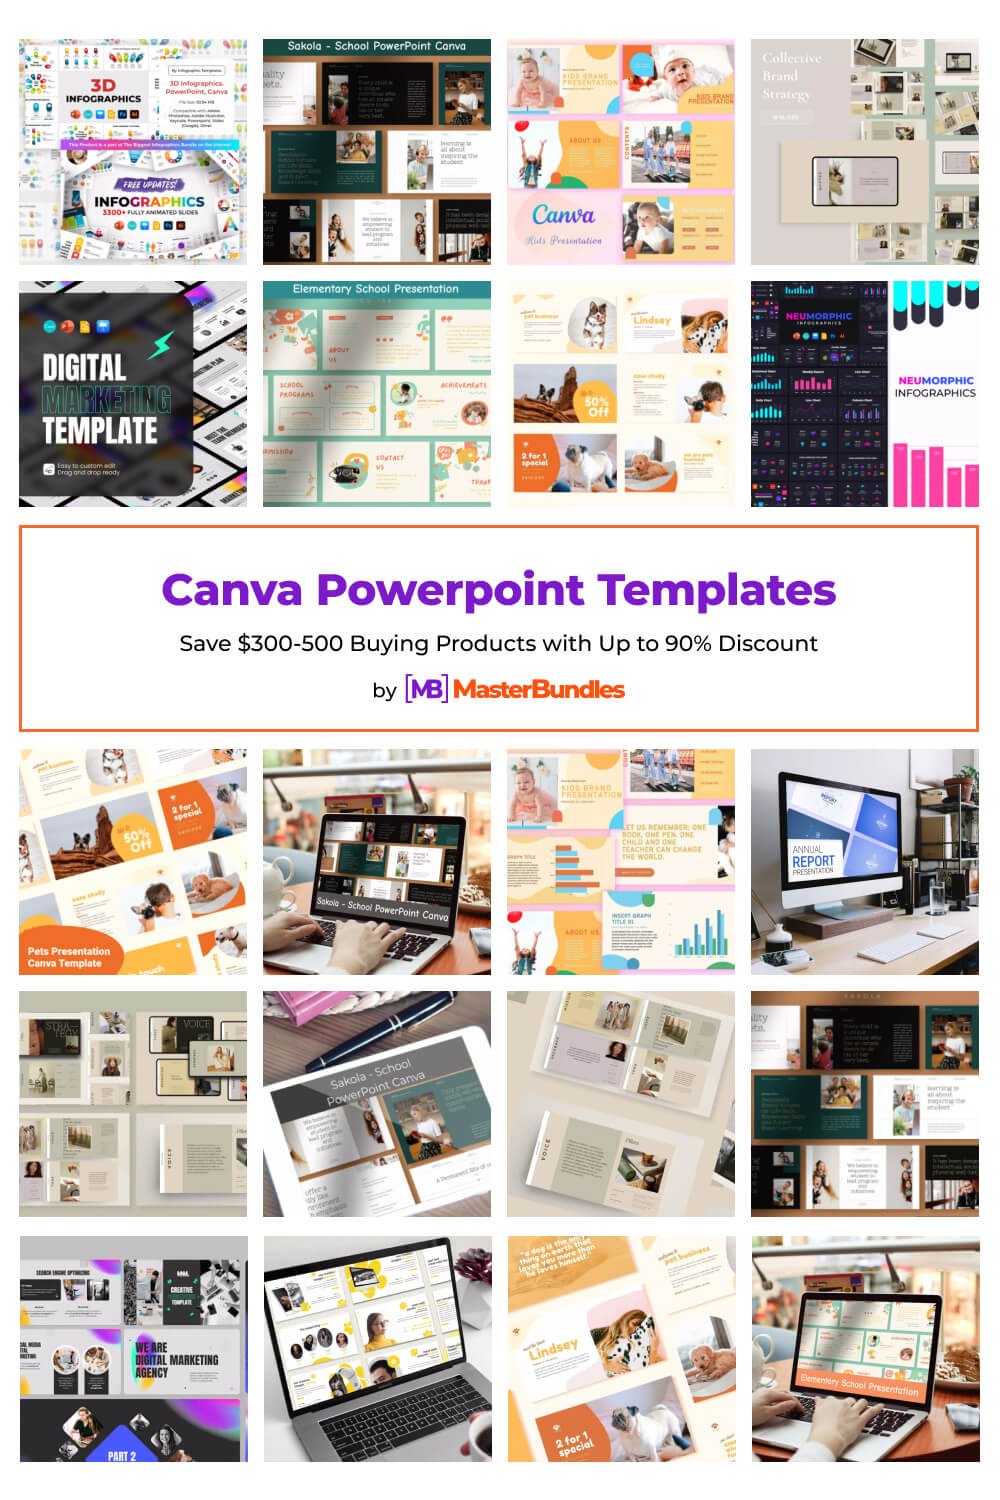 canva powerpoint templates pinterest image.